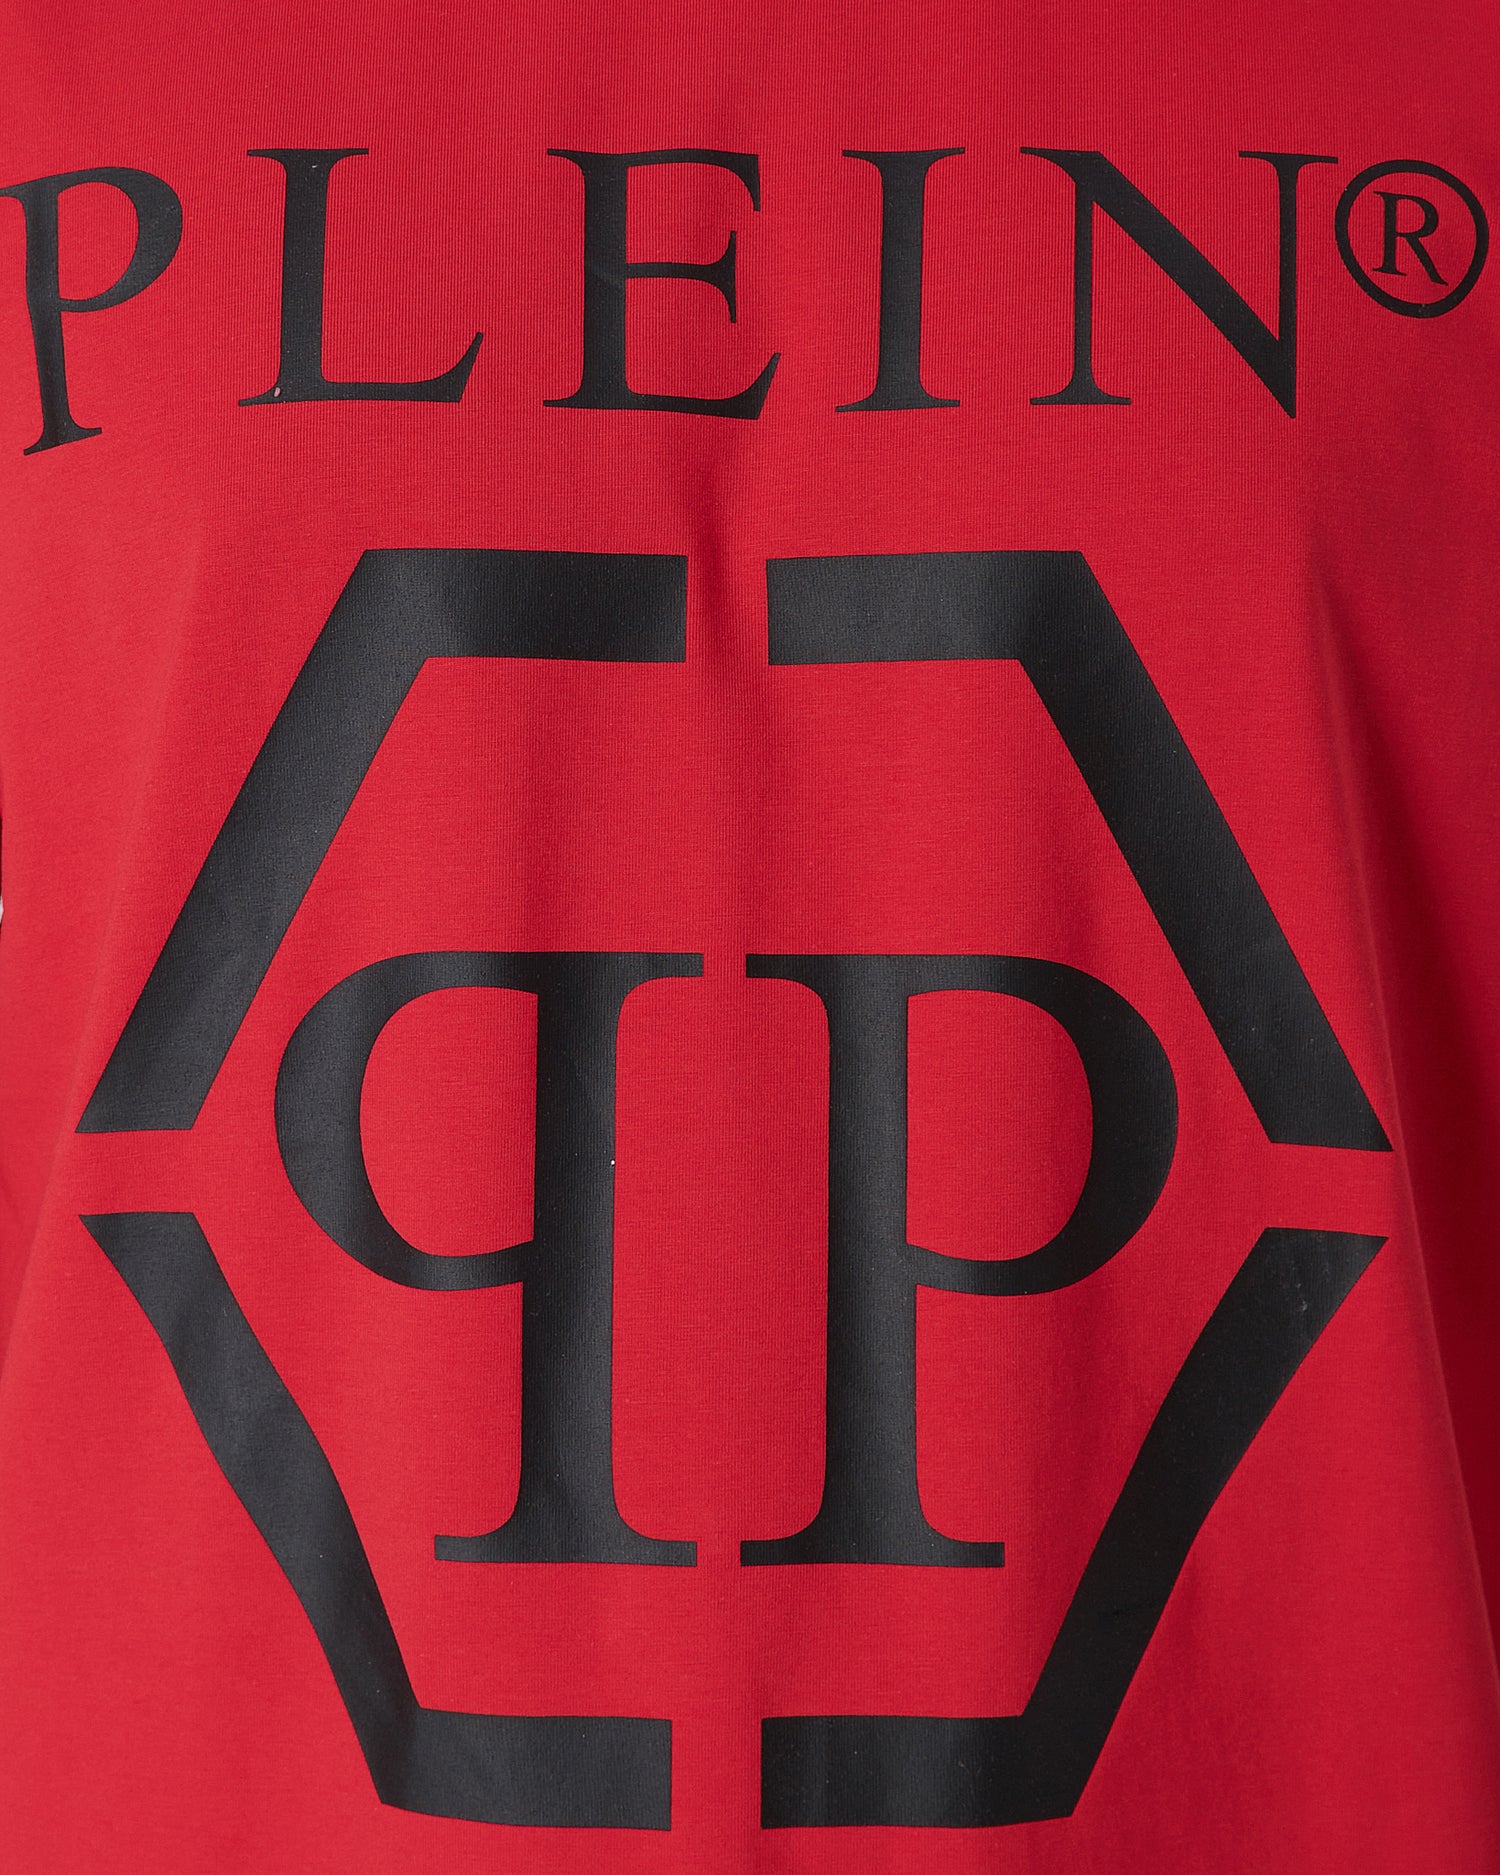 PP Logo Printed Men Red T-Shirt 14.90